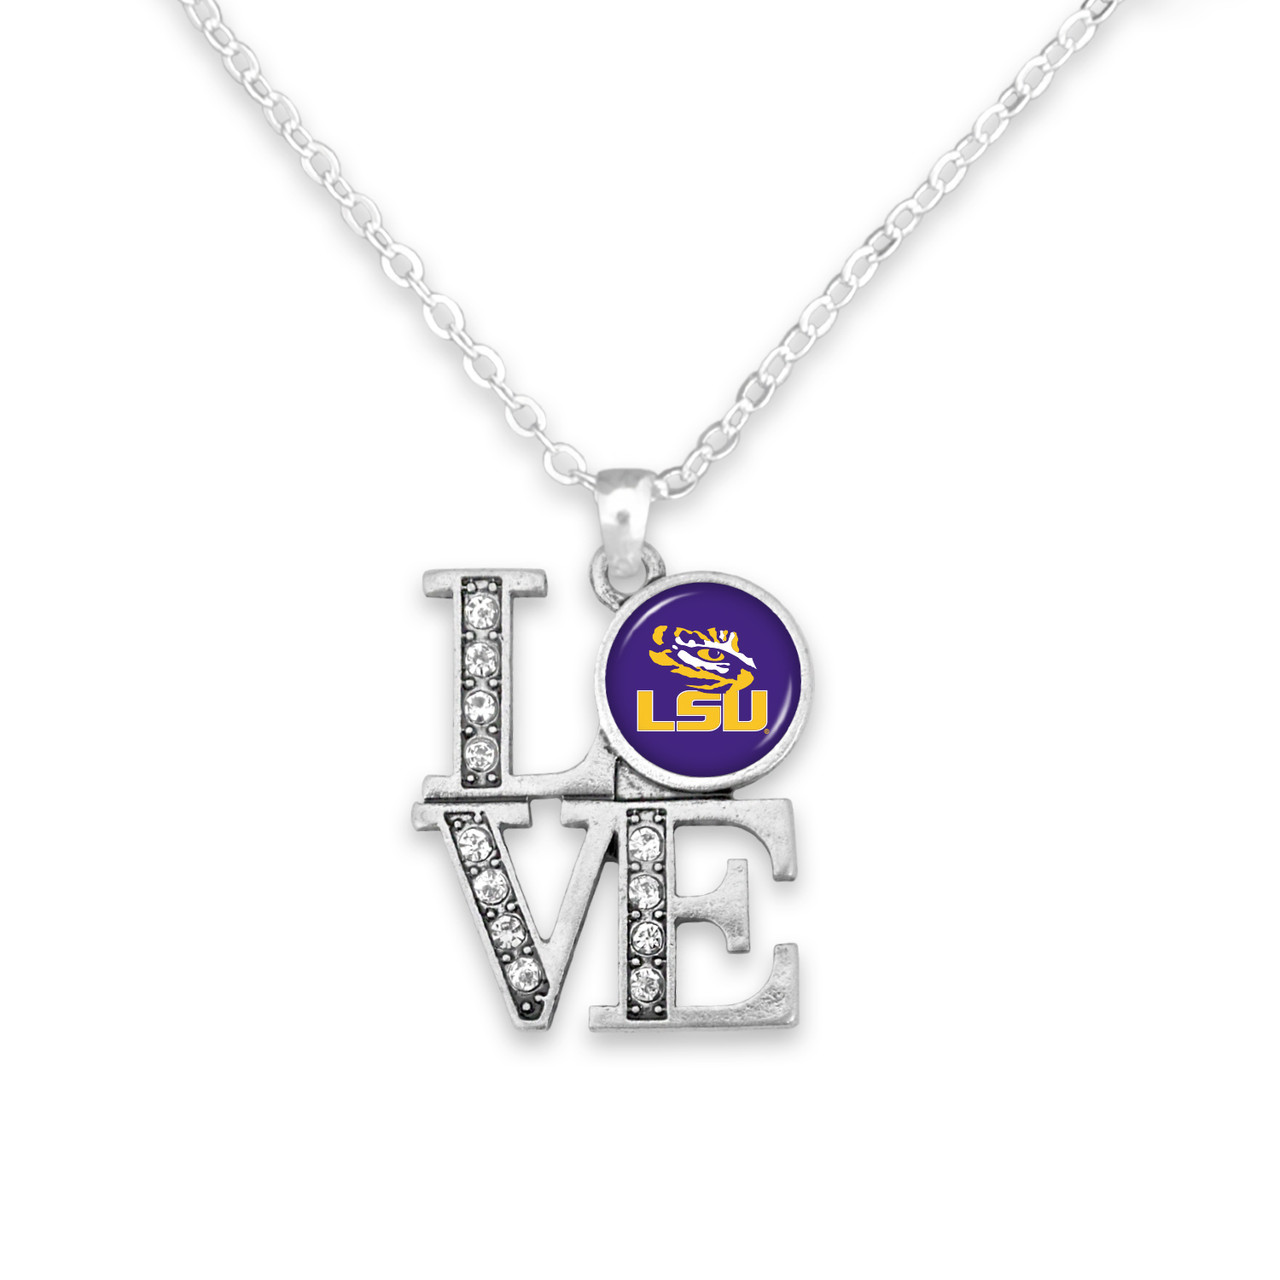 LSU Tigers Necklace- LOVE